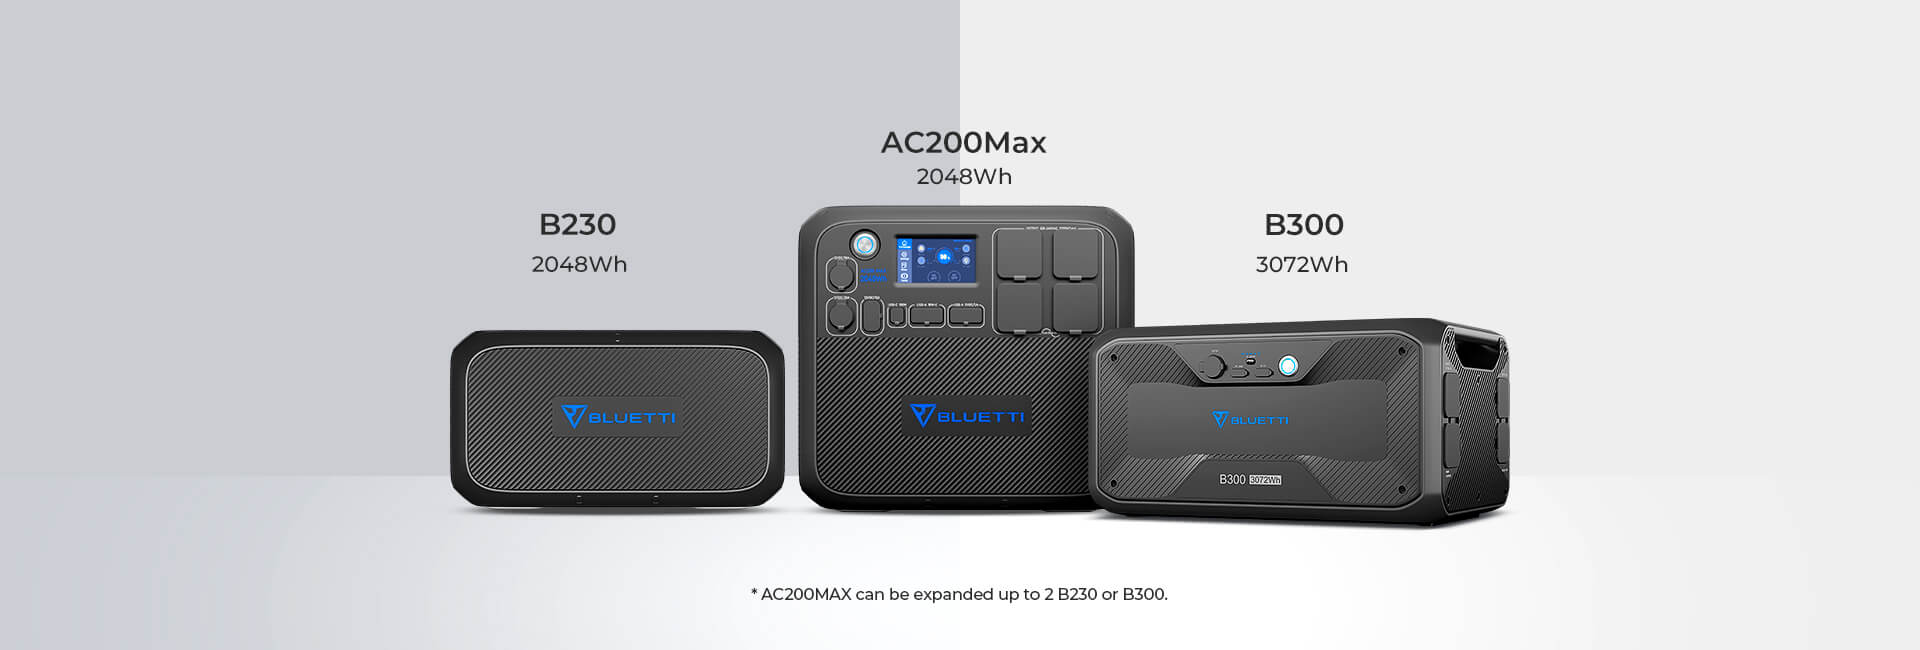 Batterie externe portable nomade 220V solaire Bluetti AC200 max